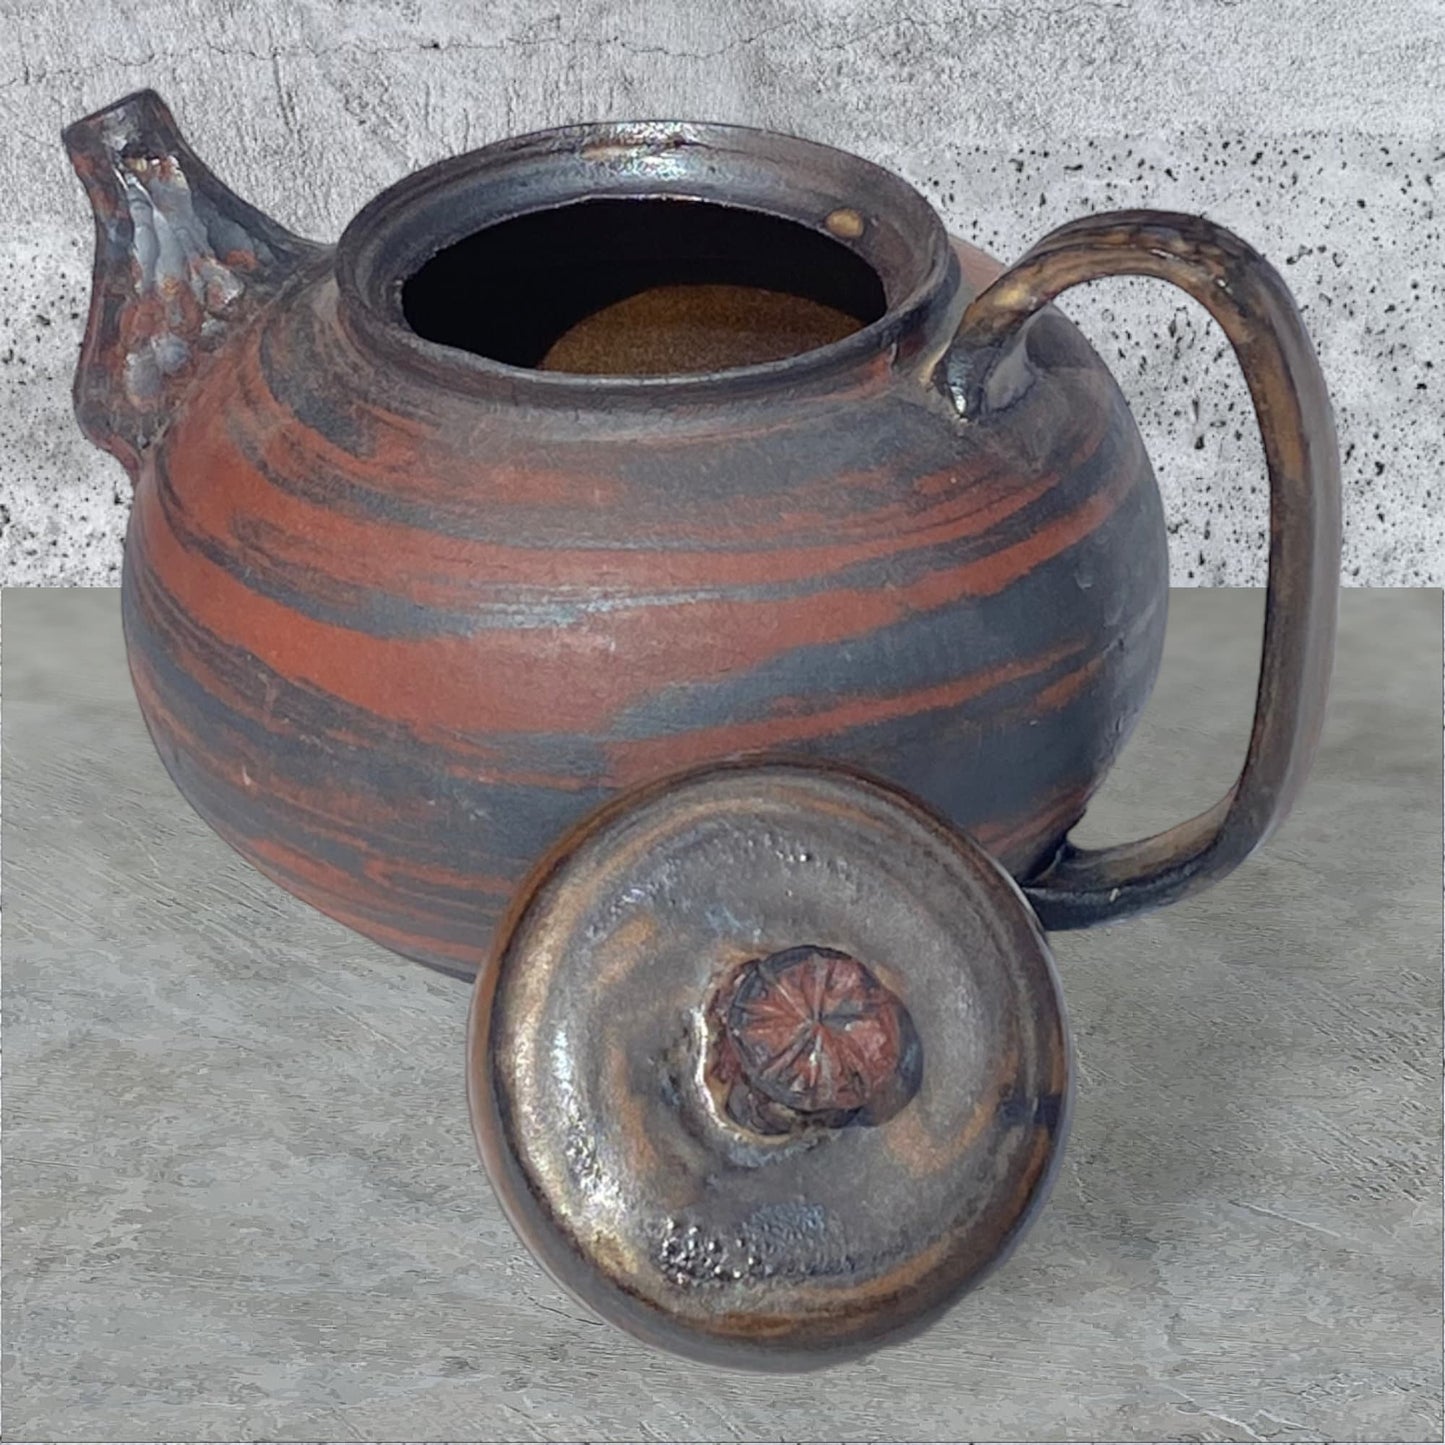 Tea Pot - Red and Black Medium Stoneware Teapot